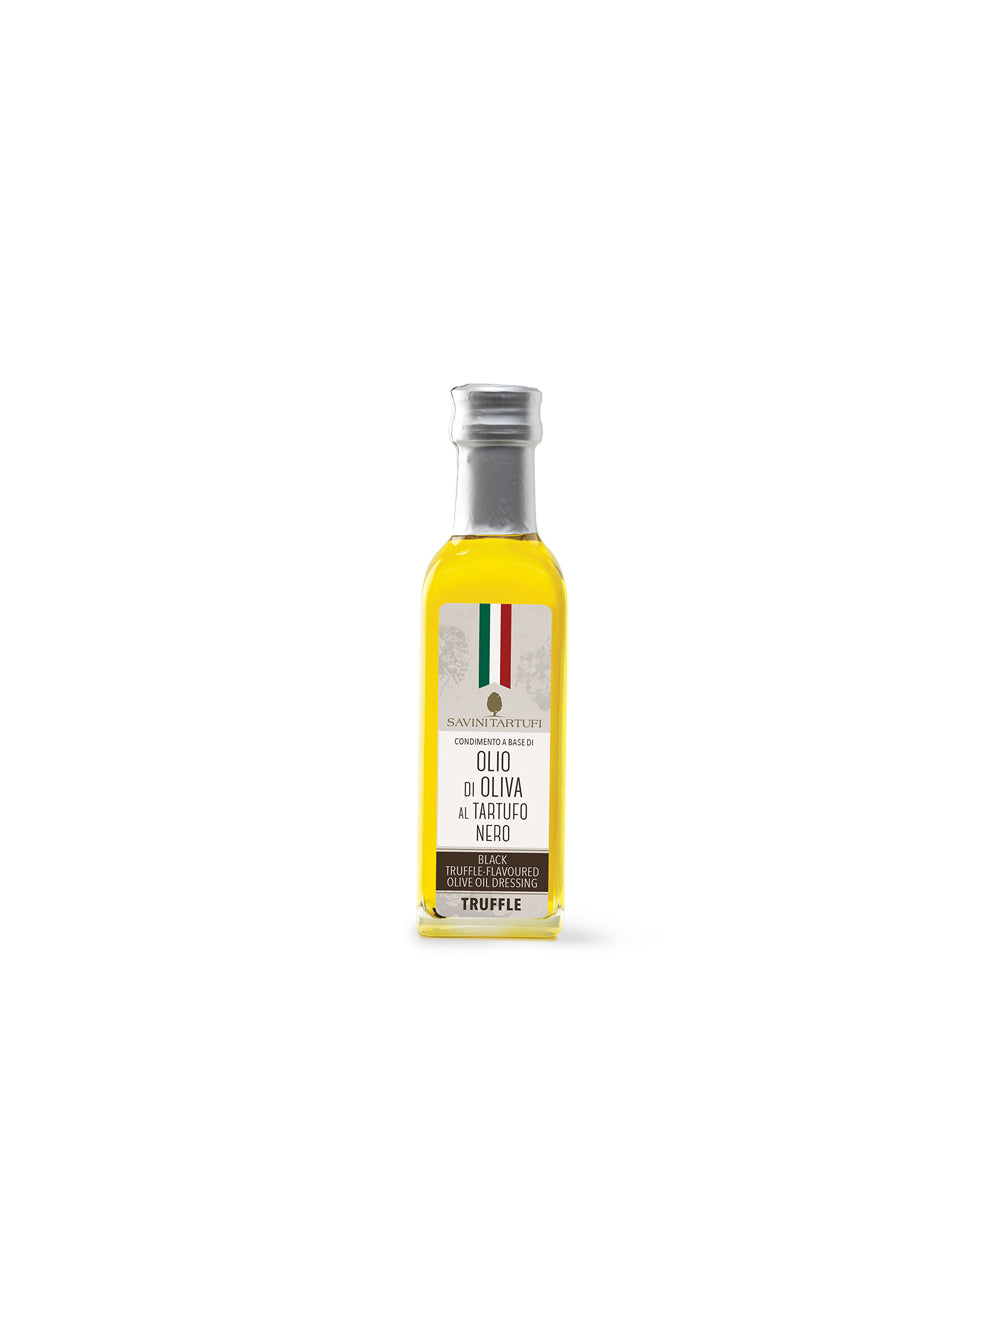 SPECIAL - NEW! "Olio di Oliva al Tartufo Nero"  Olive Oil with Black Truffle flavor by Savini Tartufi, 1.86 oz, 6/CS